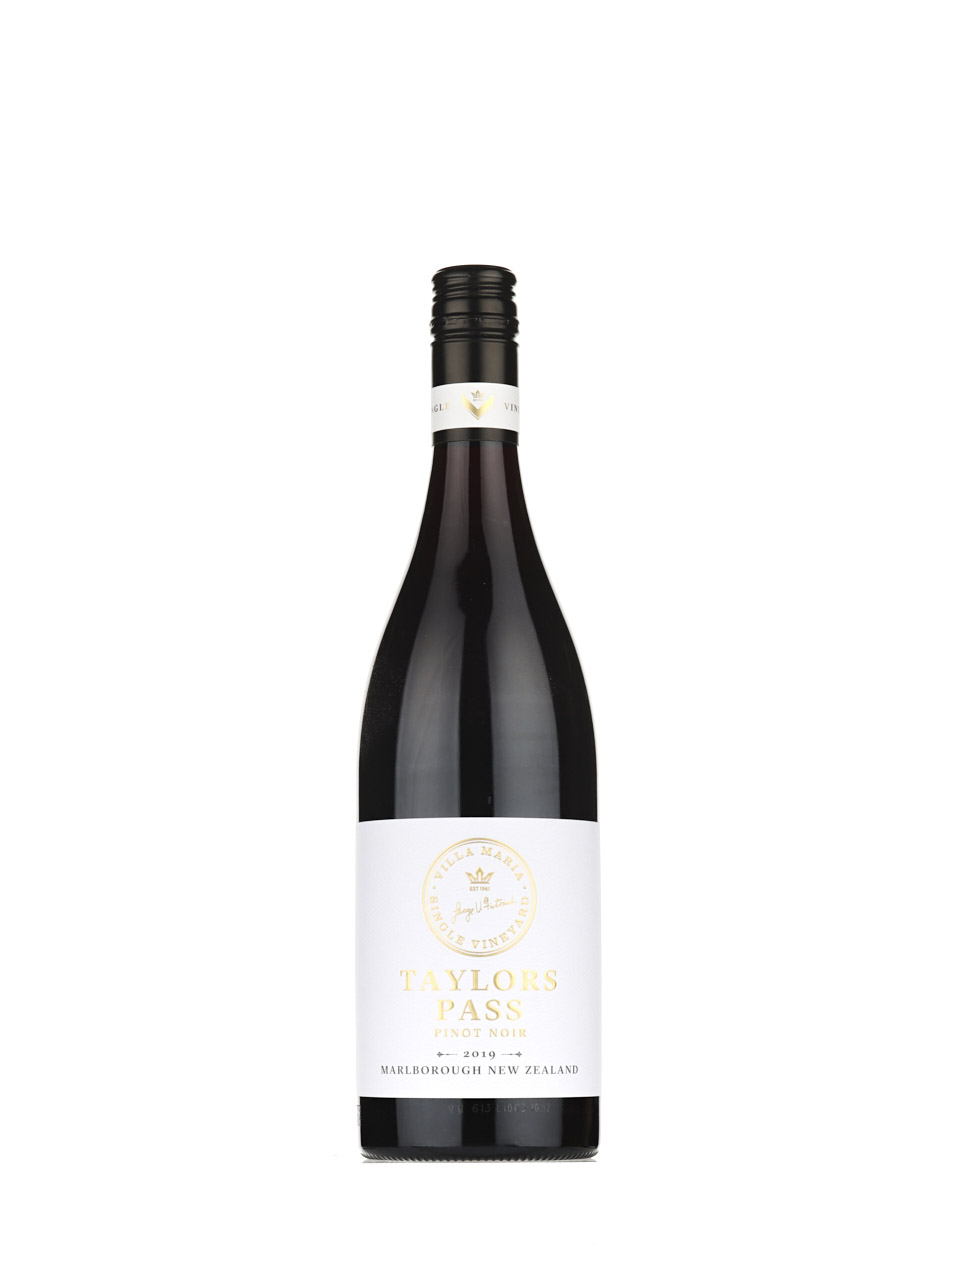 Villa Maria Single Vineyard Taylors Pass Pinot Noir,2019